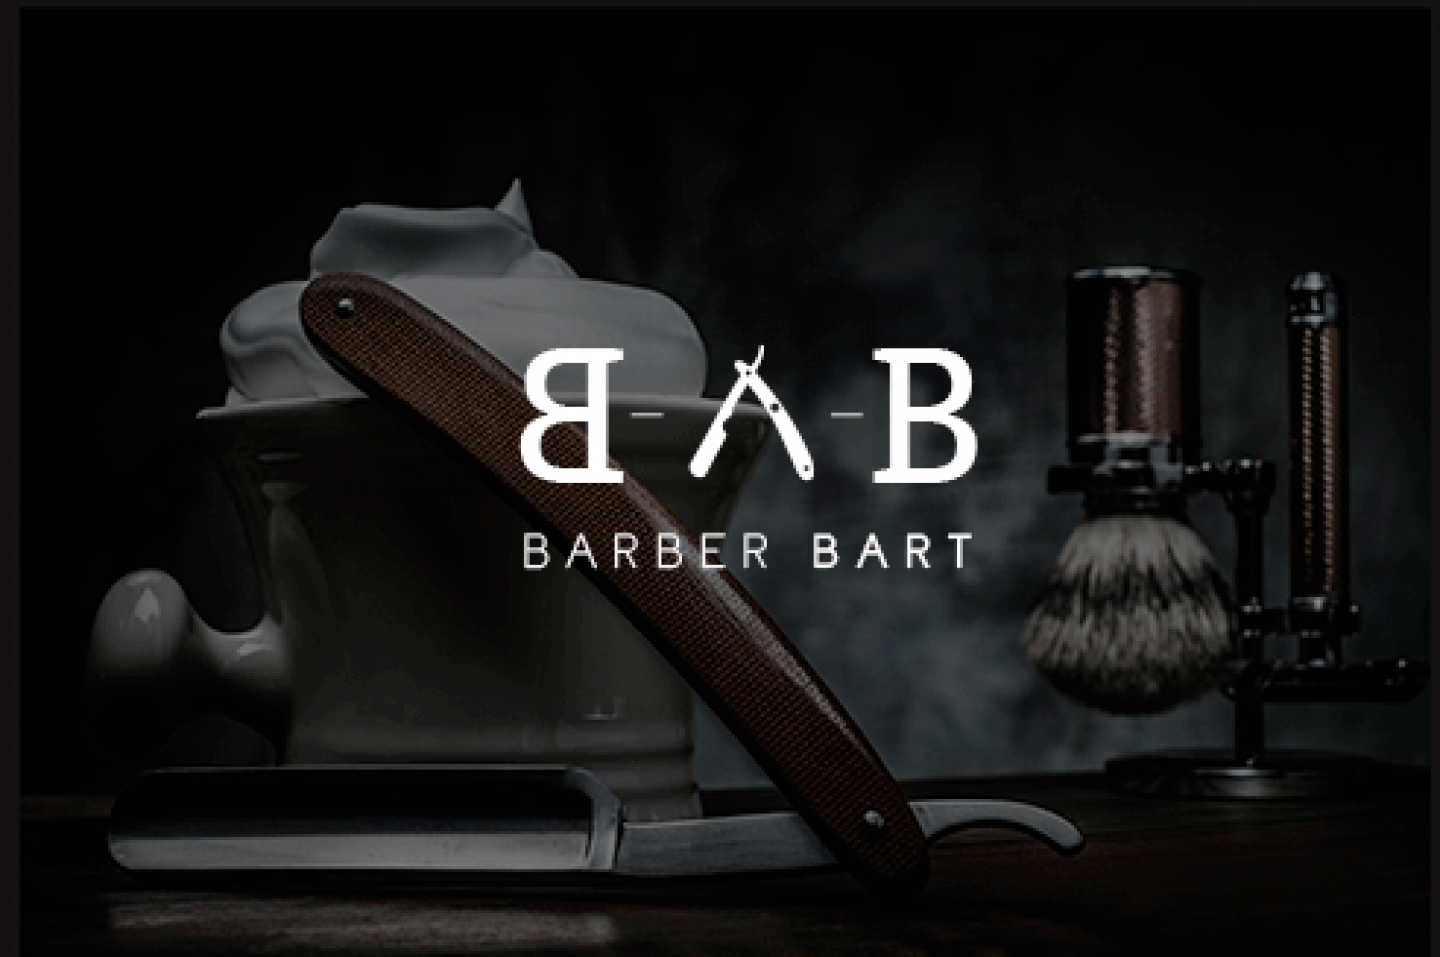 Barber Bart